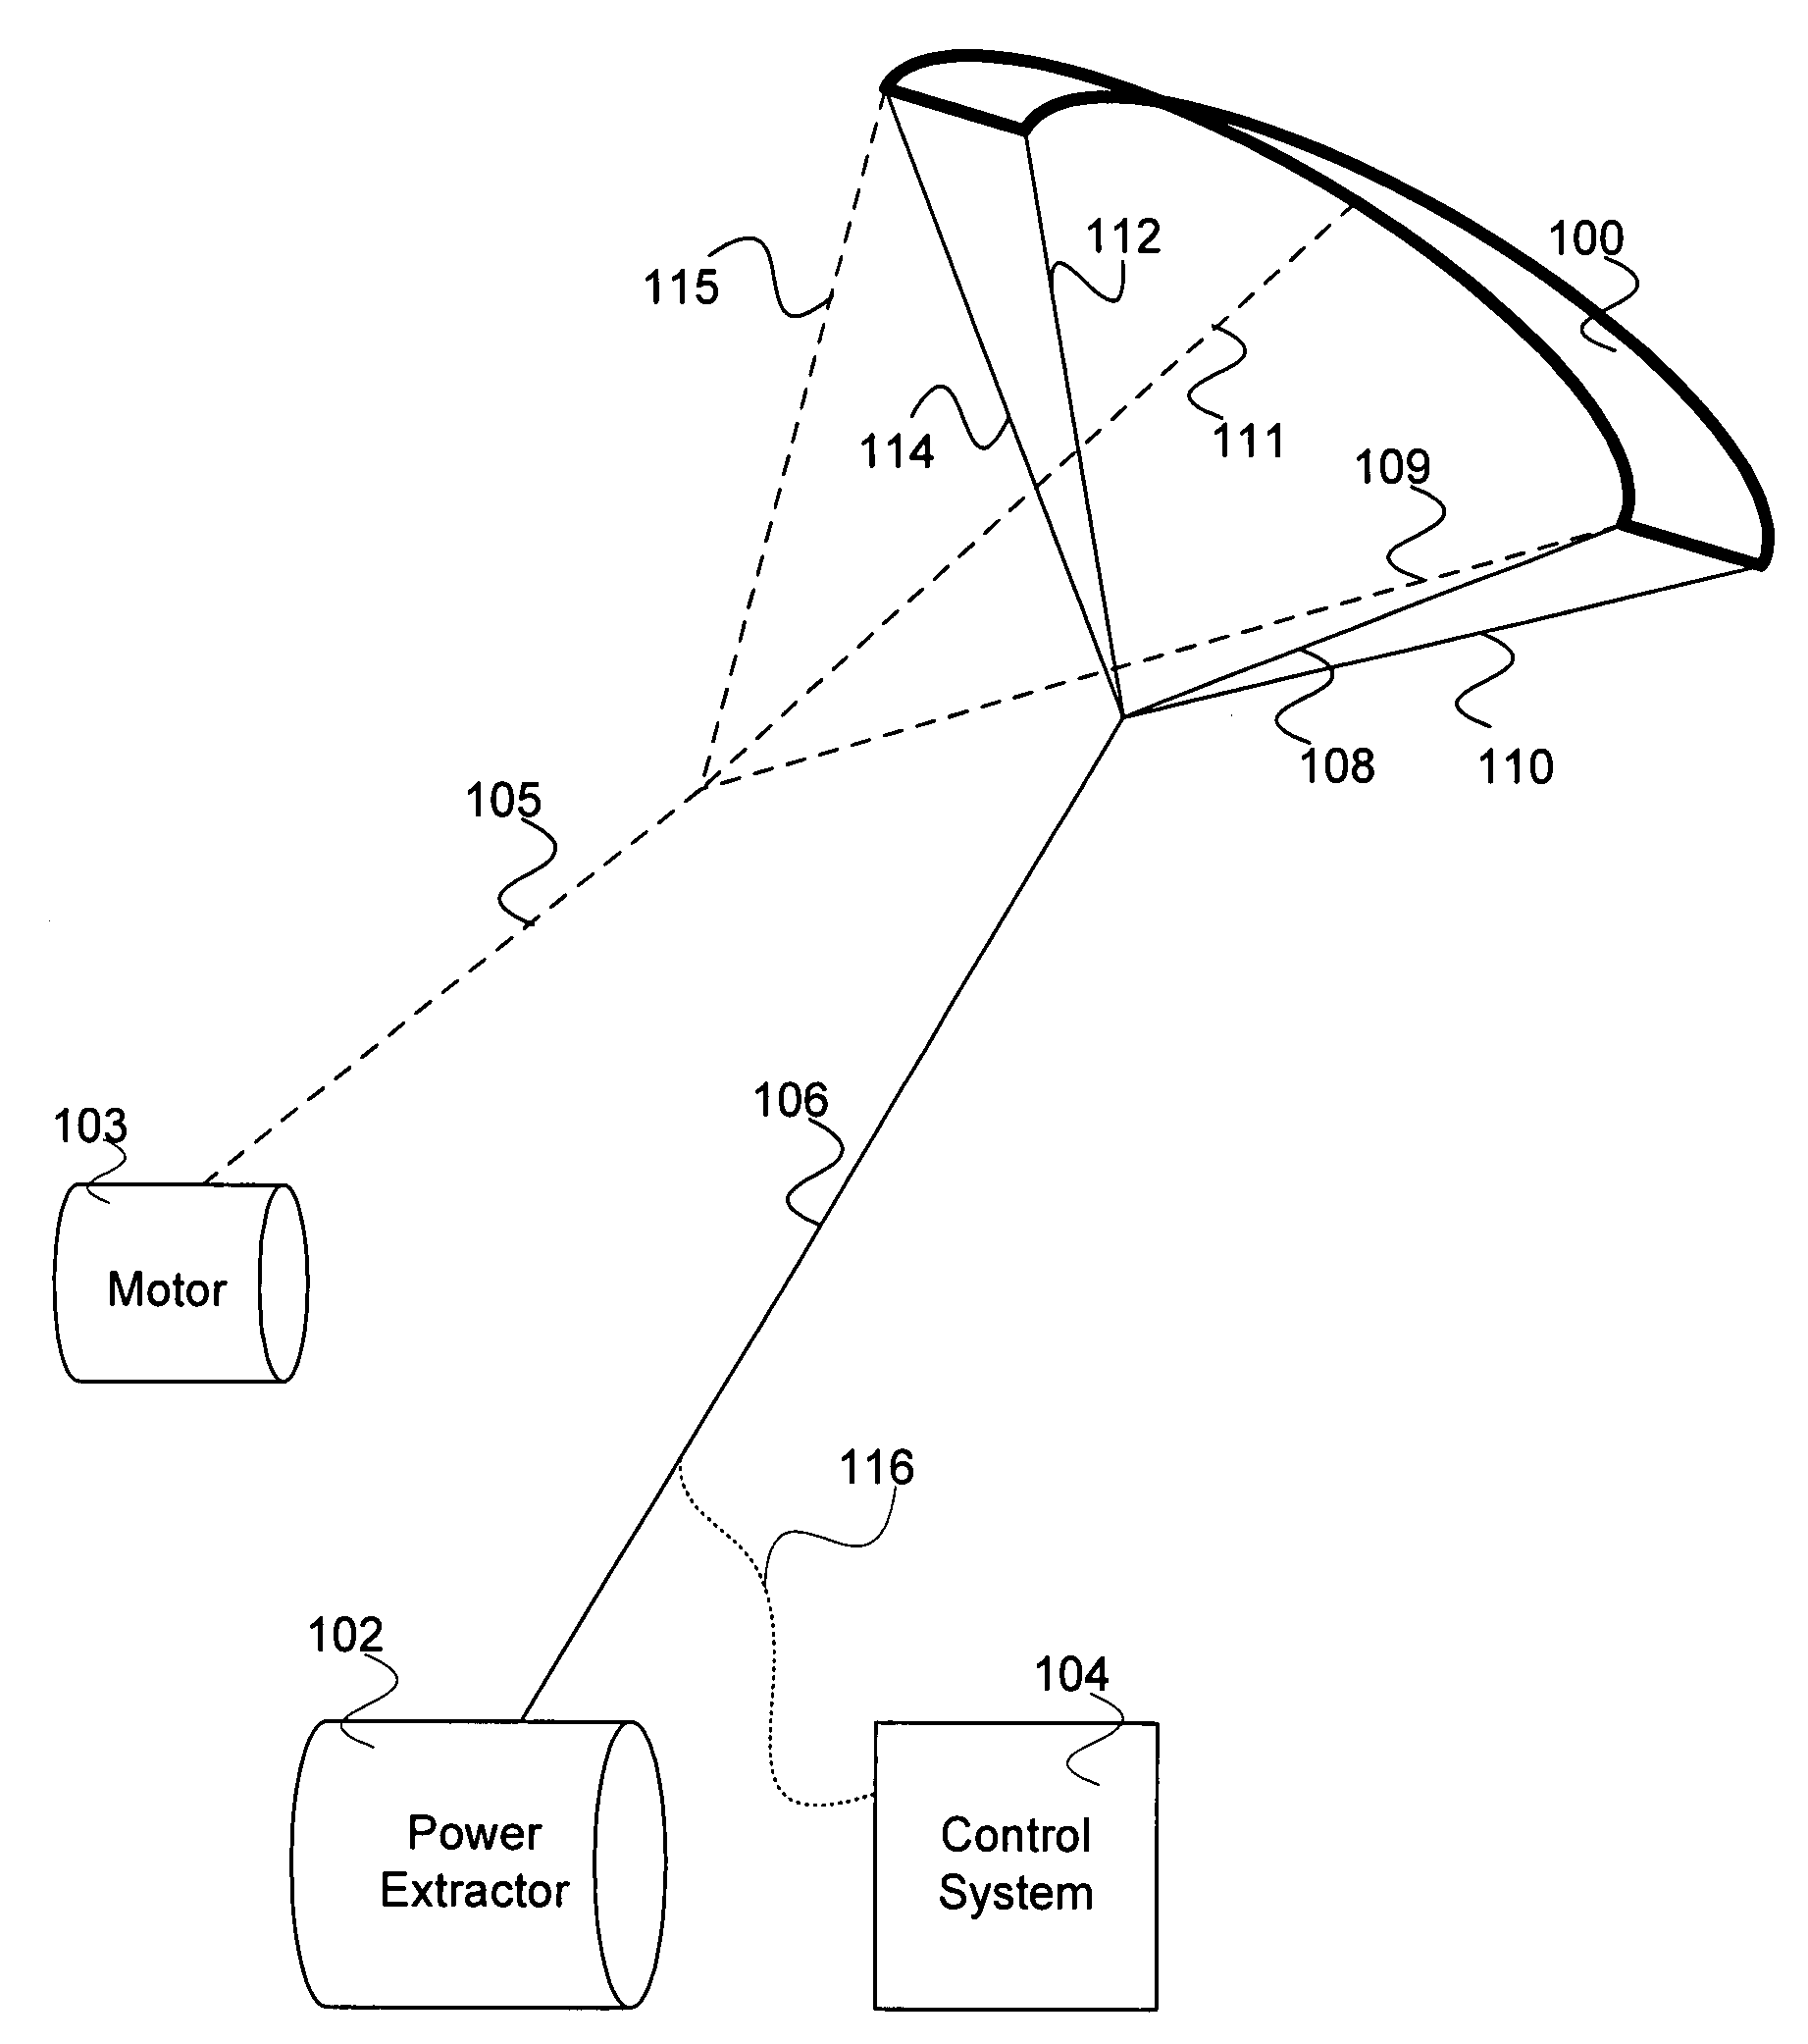 Bimodal kite system